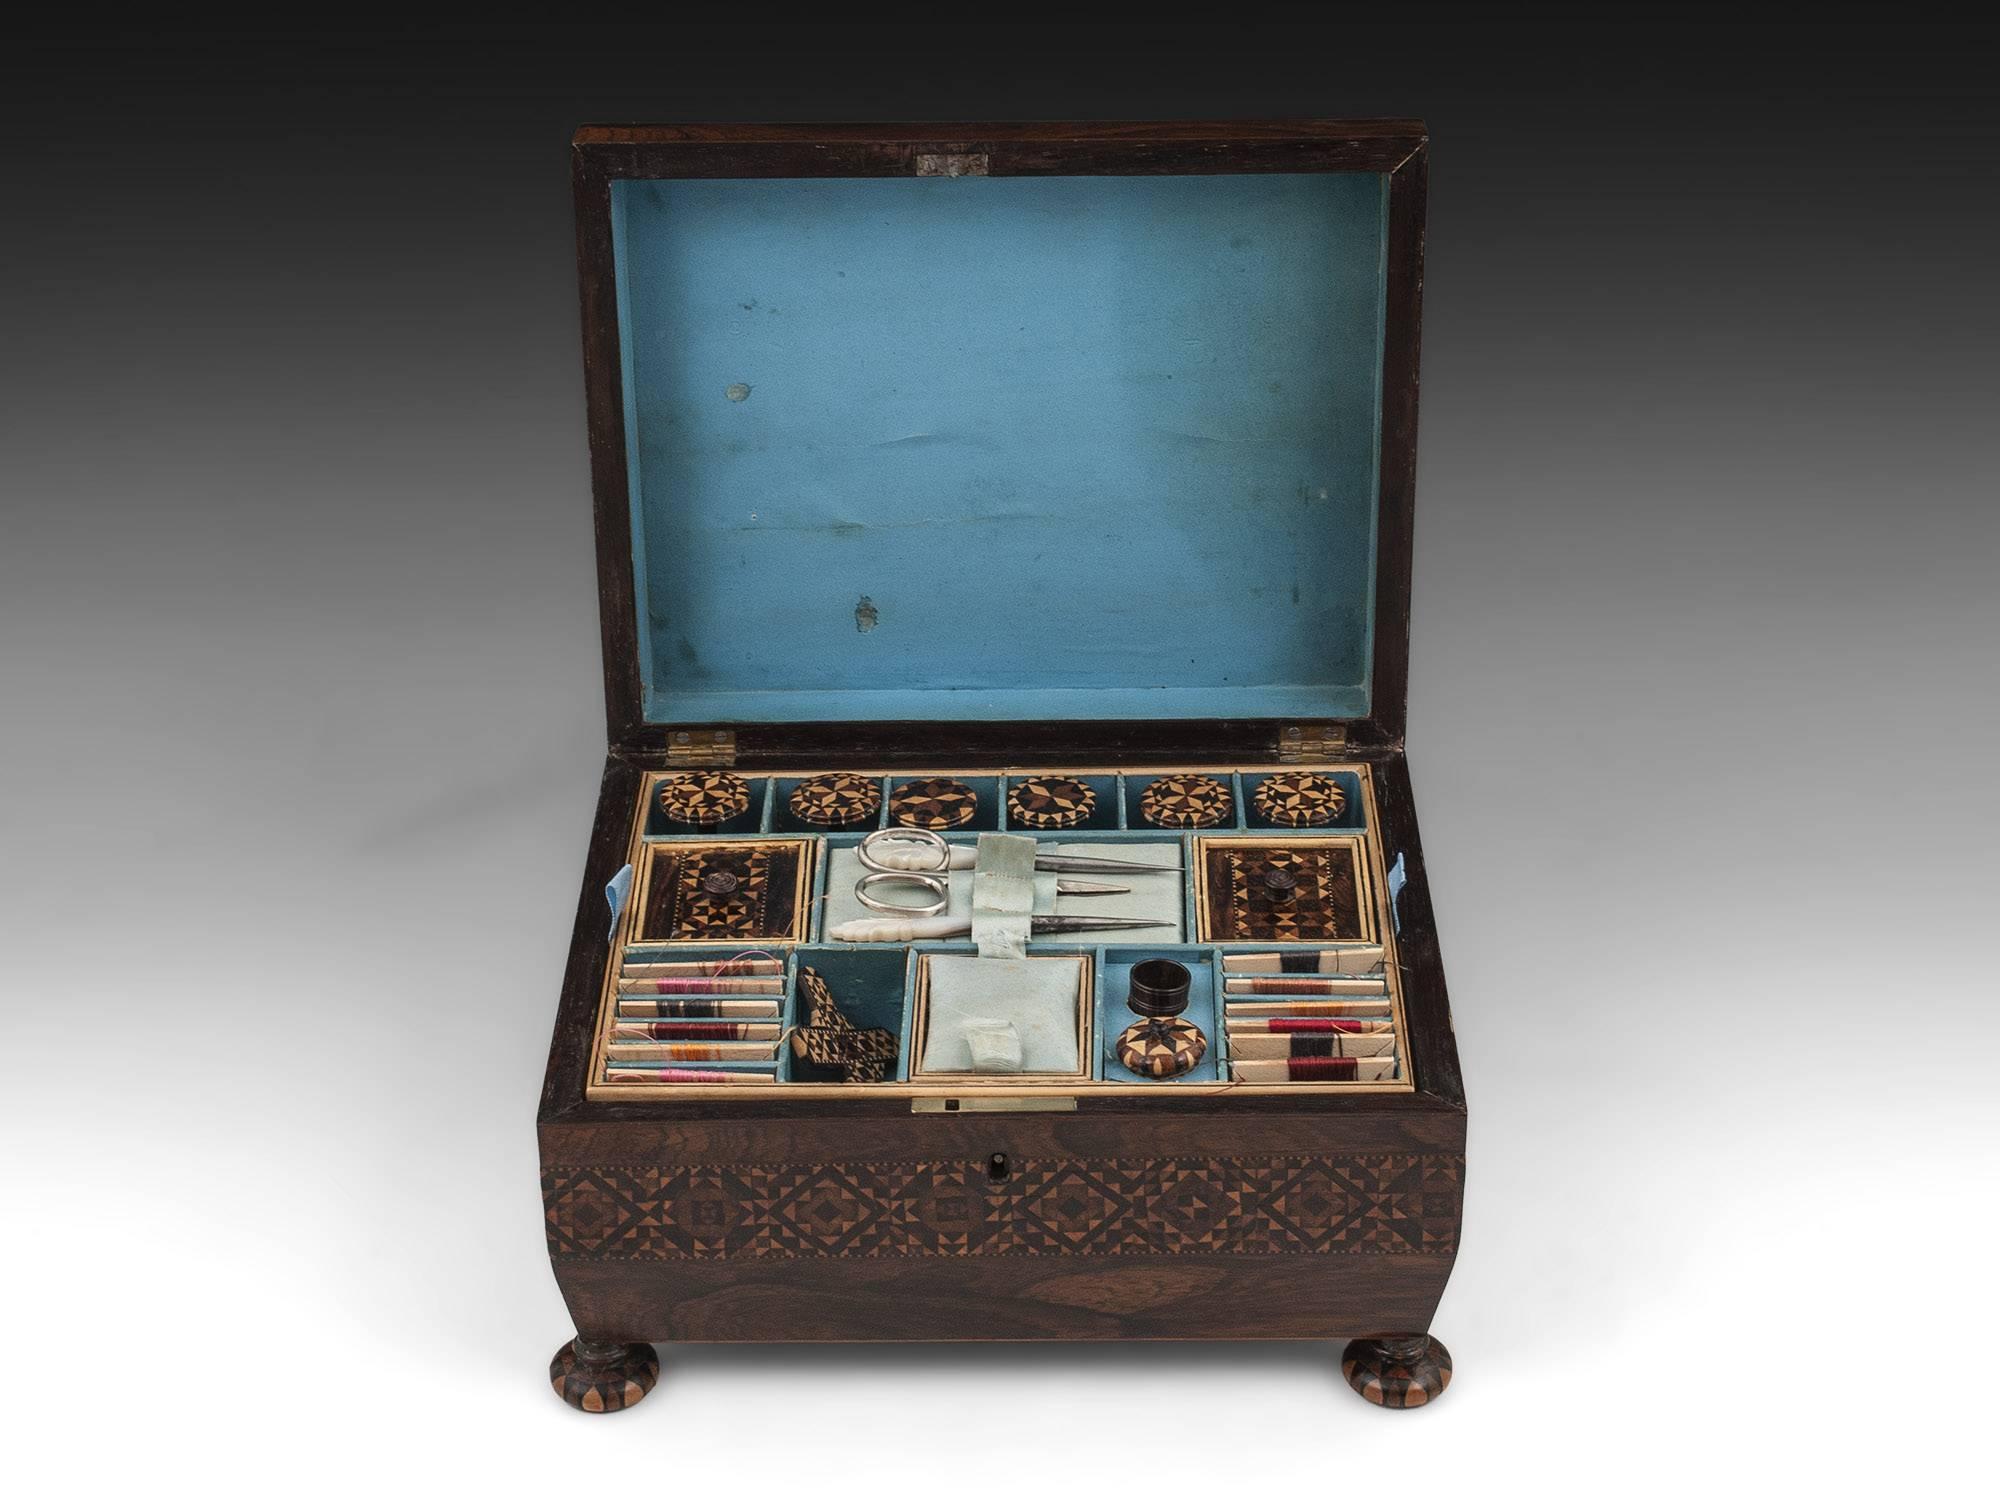 Wood Antique Tunbridge Ware Sewing Box, 19th Century